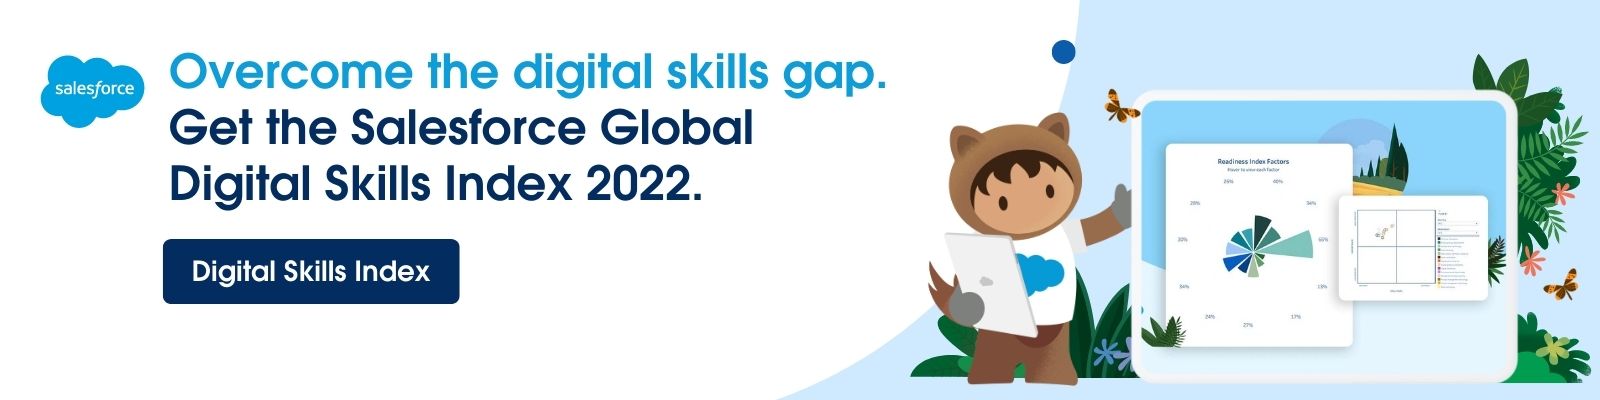 Get the Salesforce Global Digital Skills Index 2022.